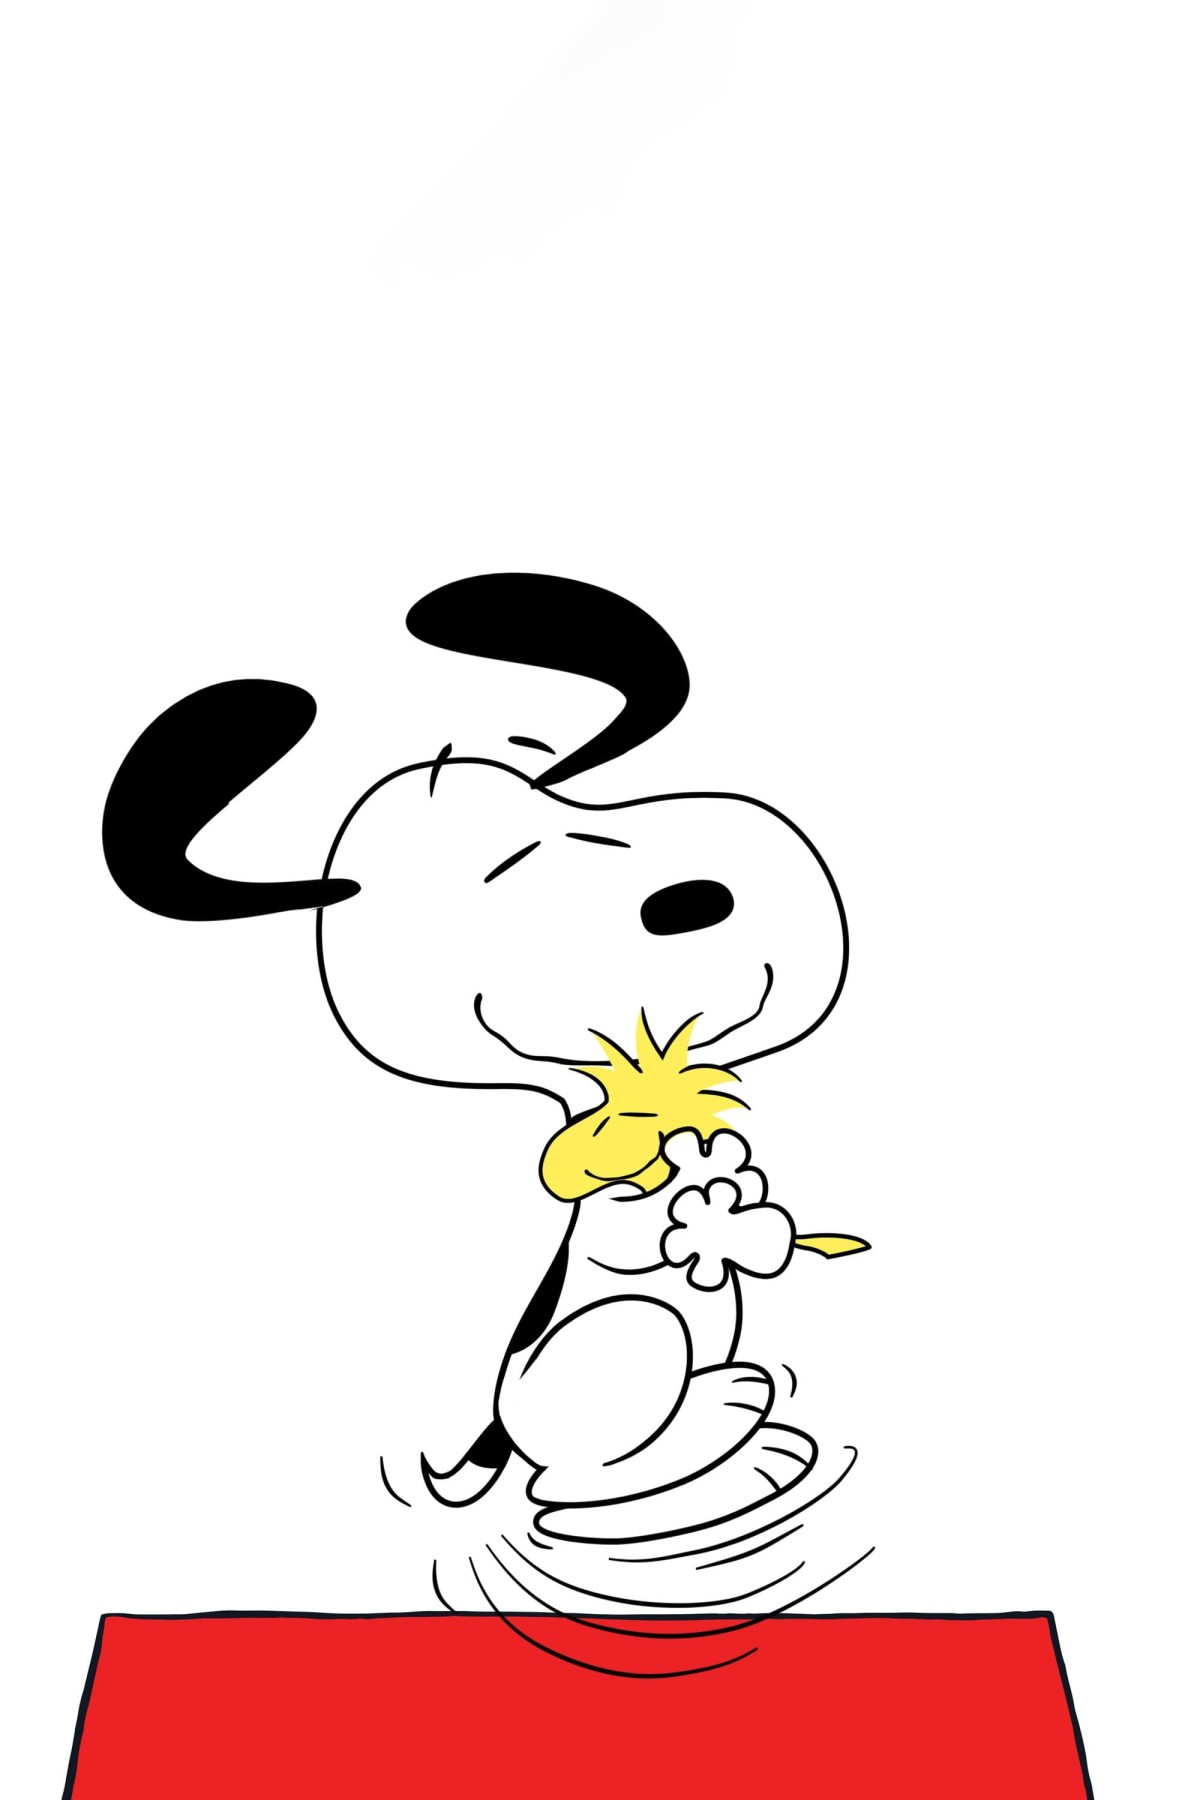 De Snoopy show image